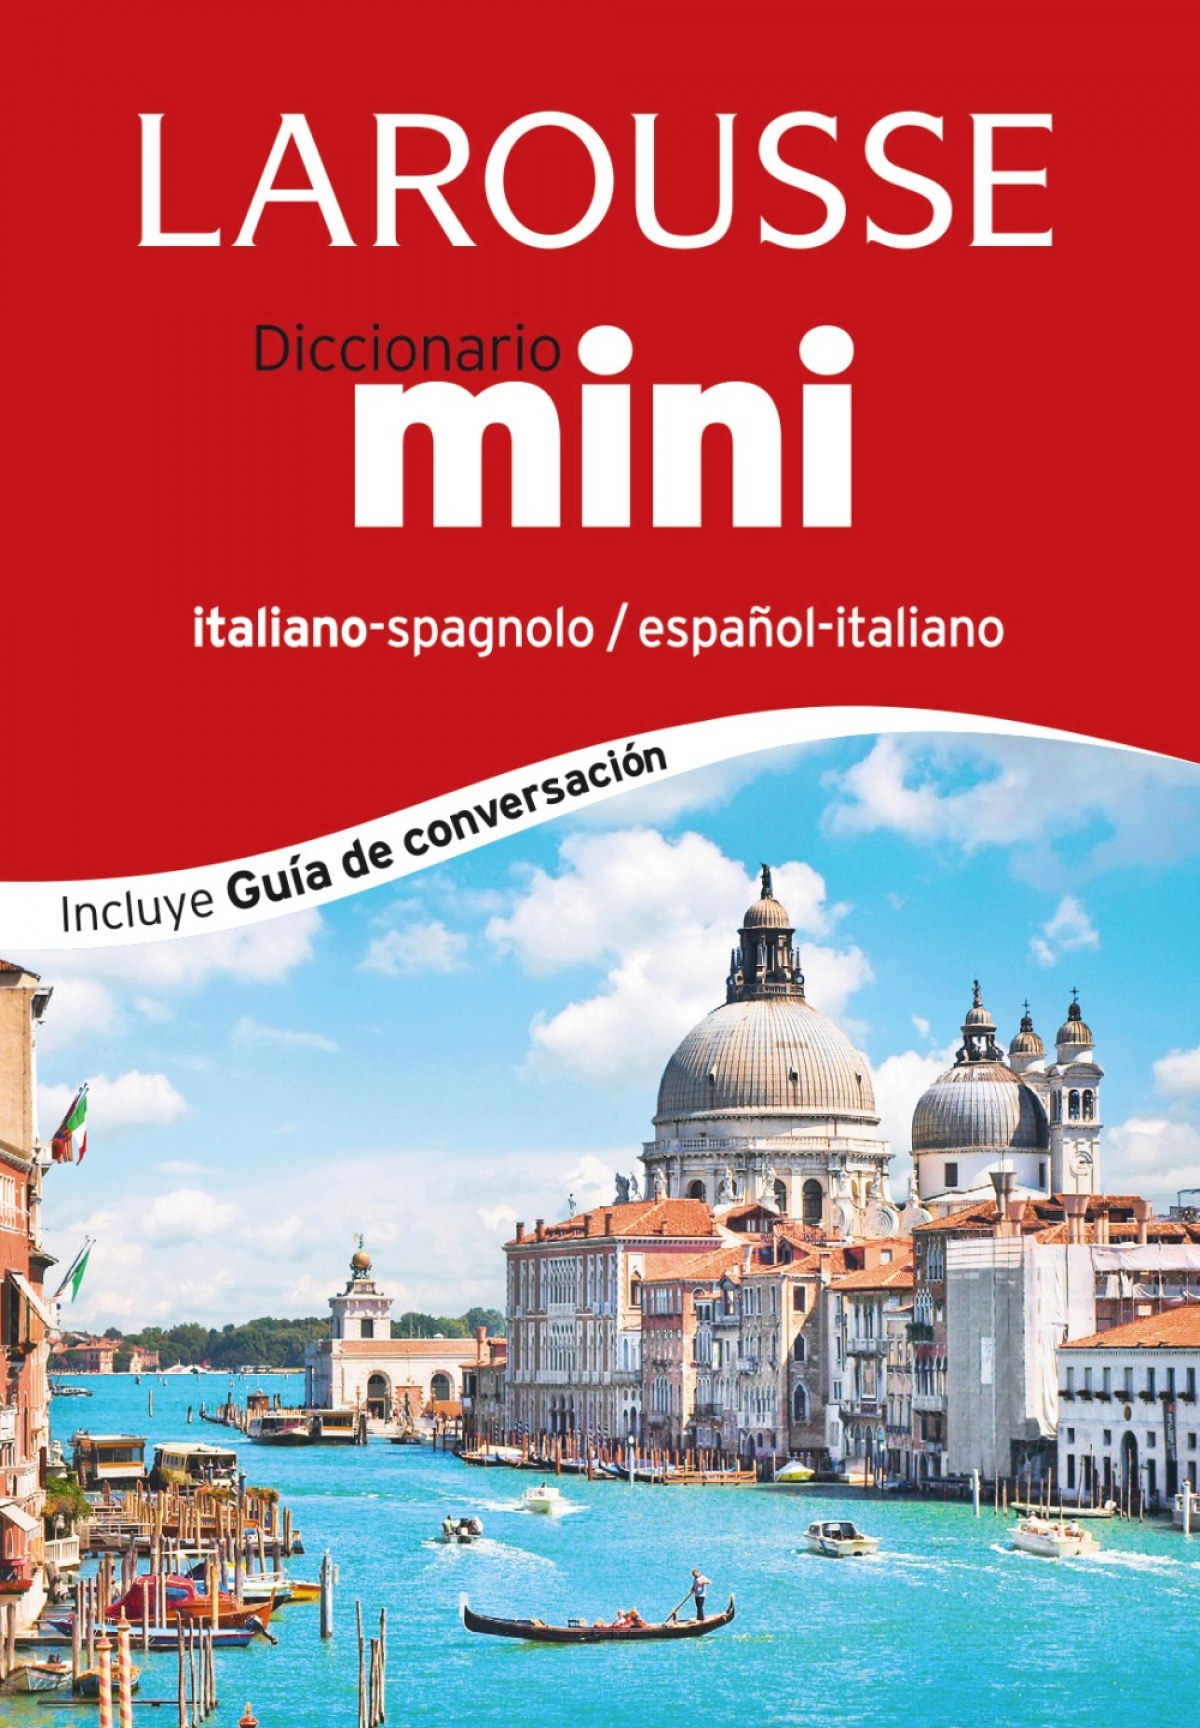 Diccionario mini español-italiano / Italiano-Spagnolo - Vv.Aa